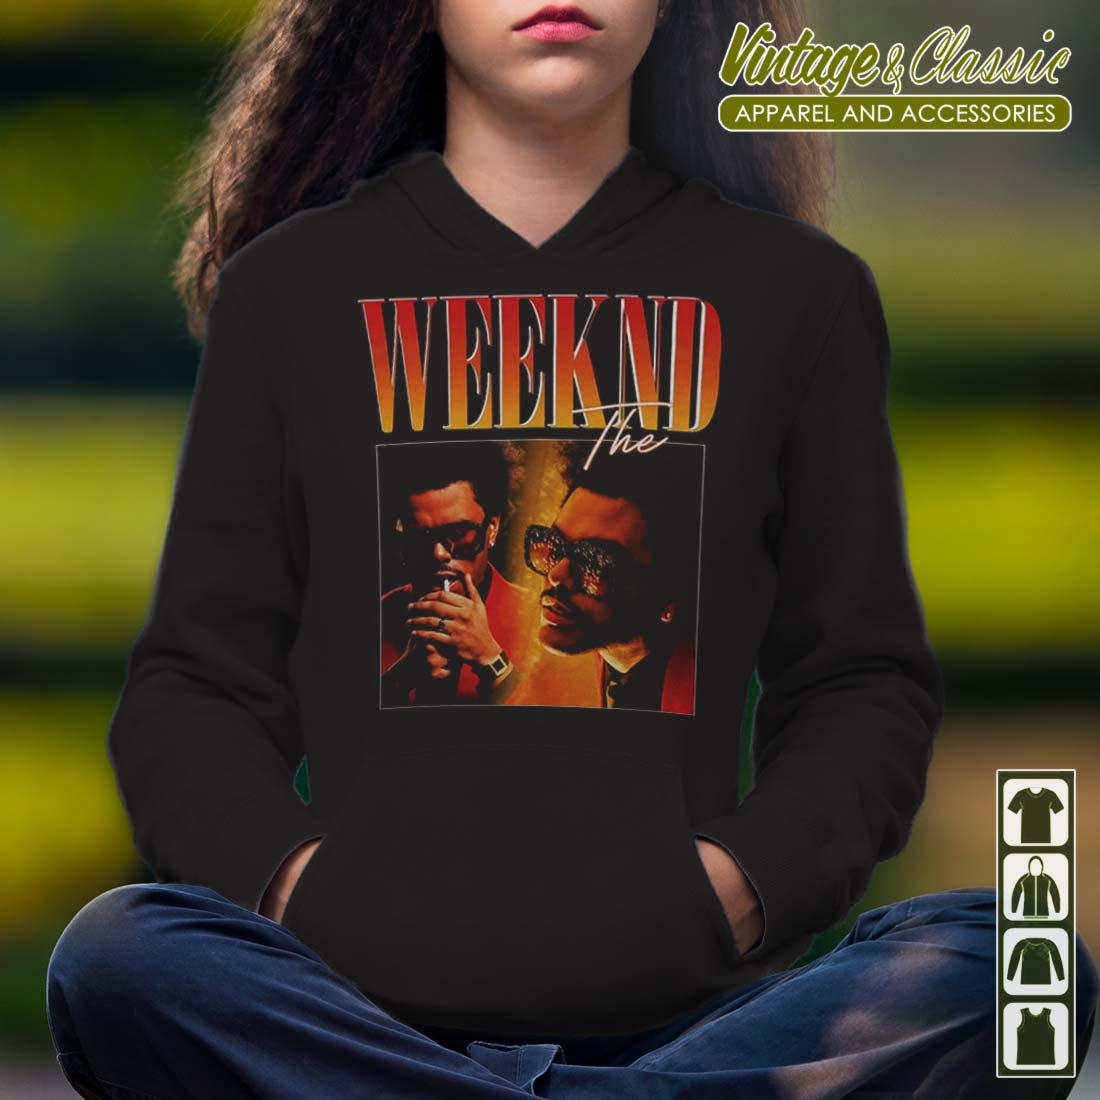 The Weeknd Store - The Weeknd® Fans Merch